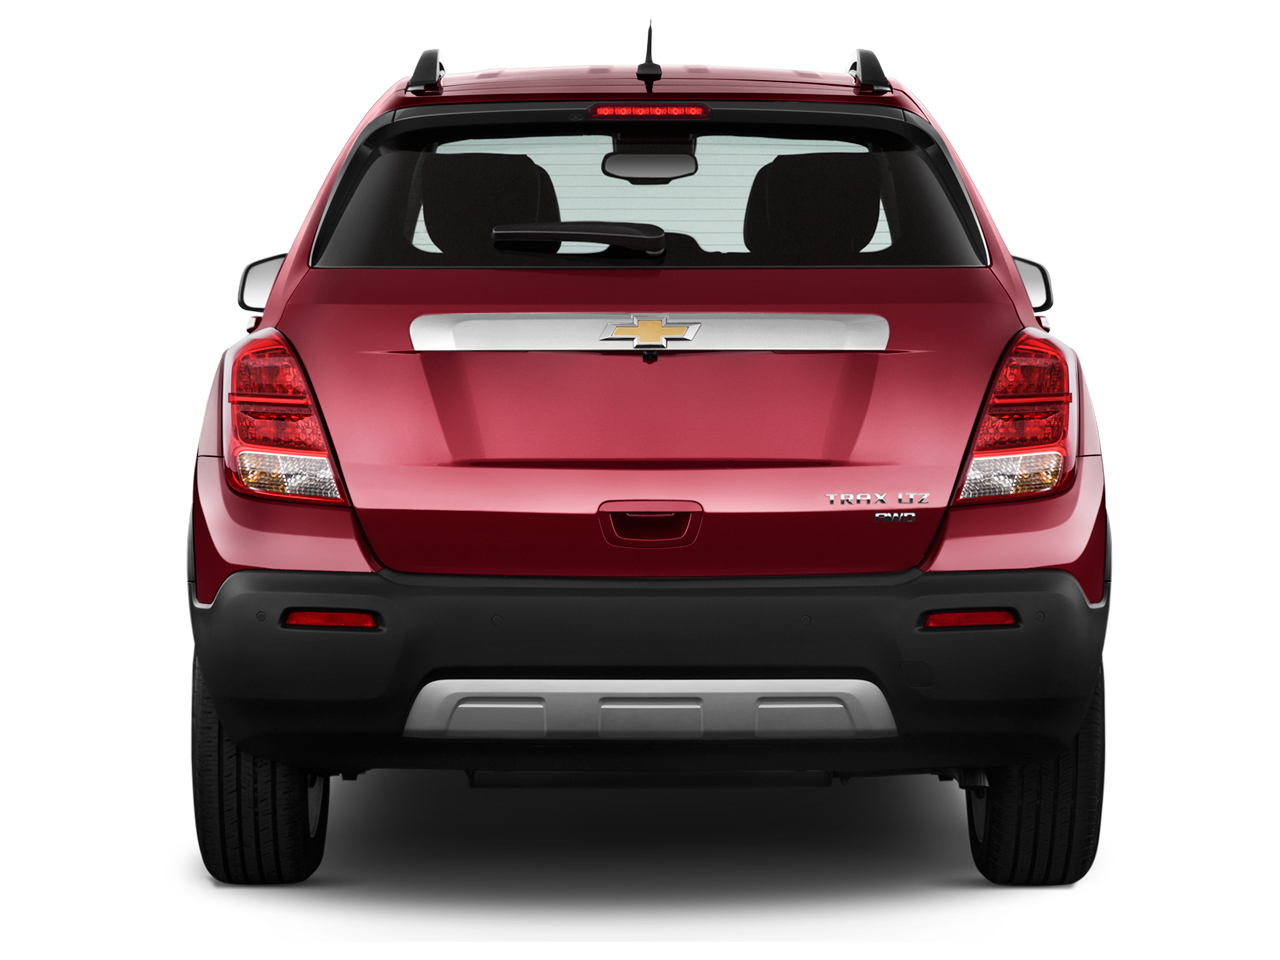 Chevrolet Trax LTZ 2016 rear view